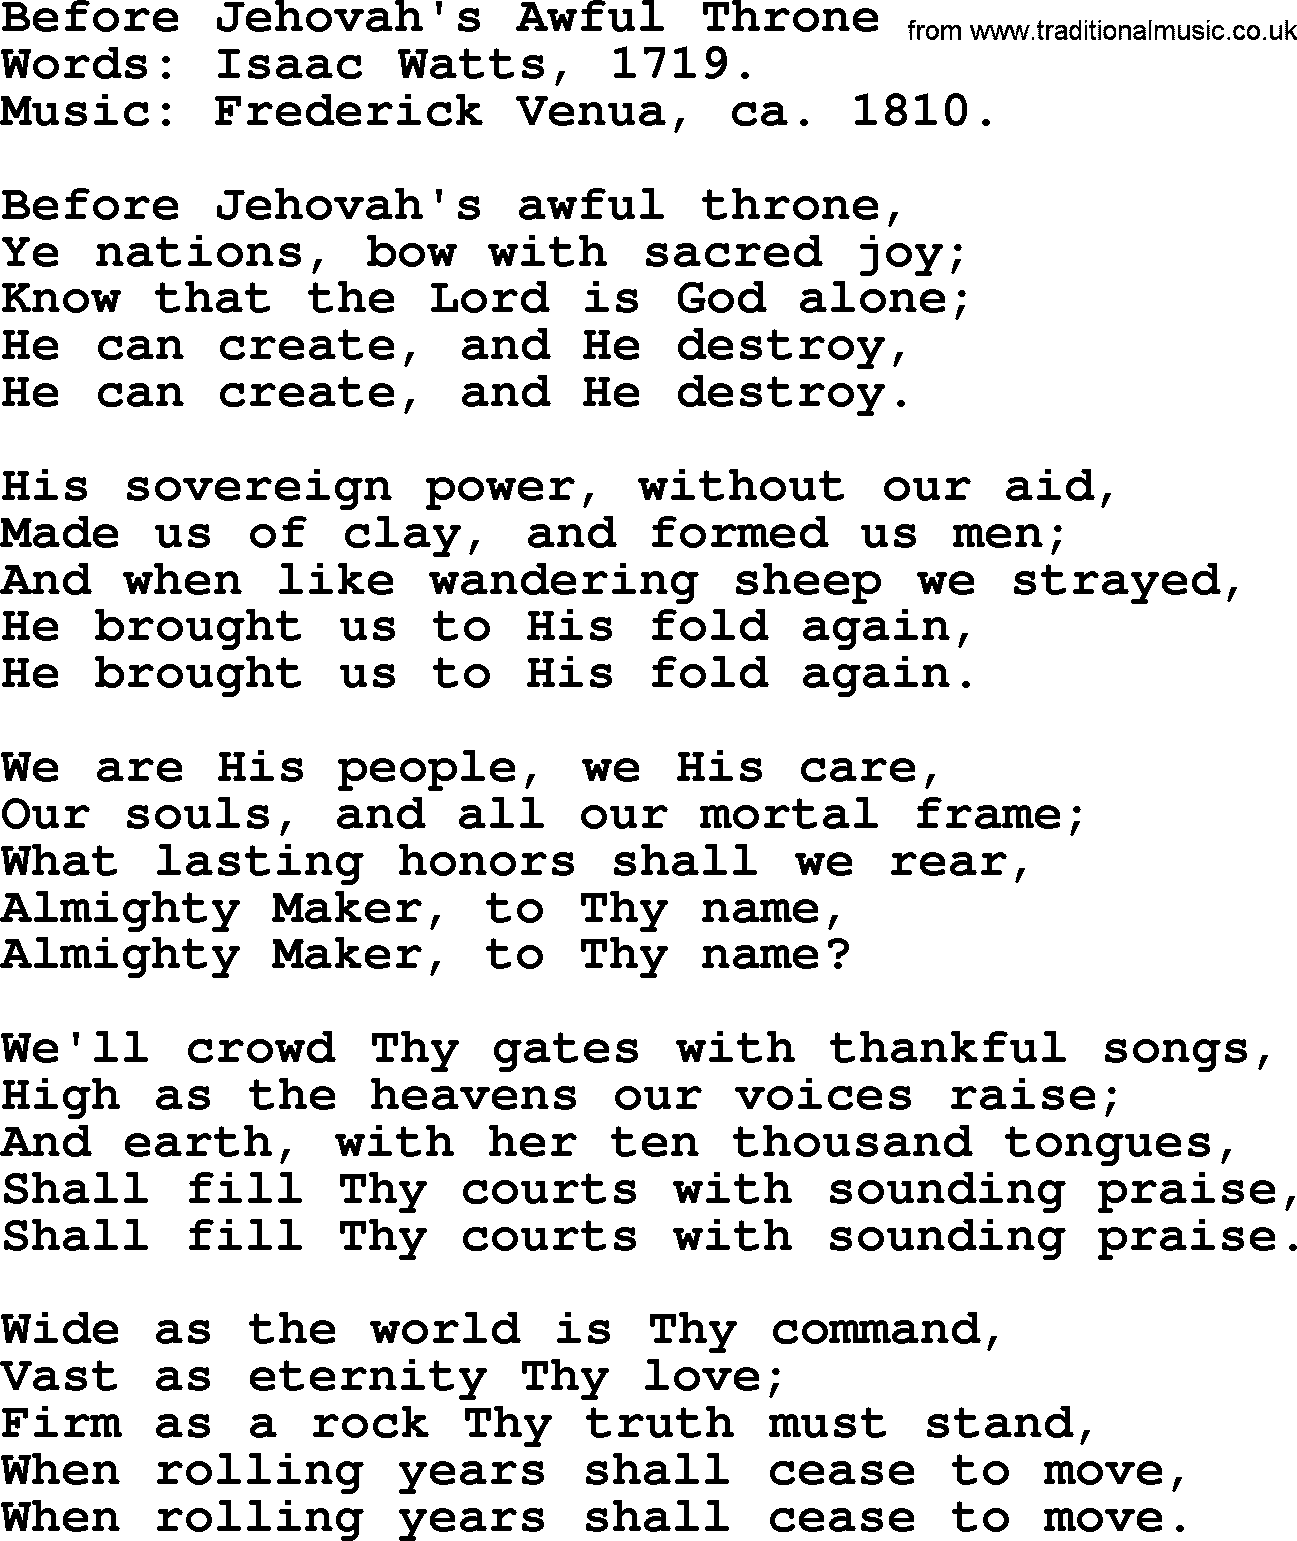 Isaac Watts Christian hymn: Before Jehovah's Awful Throne- lyricss